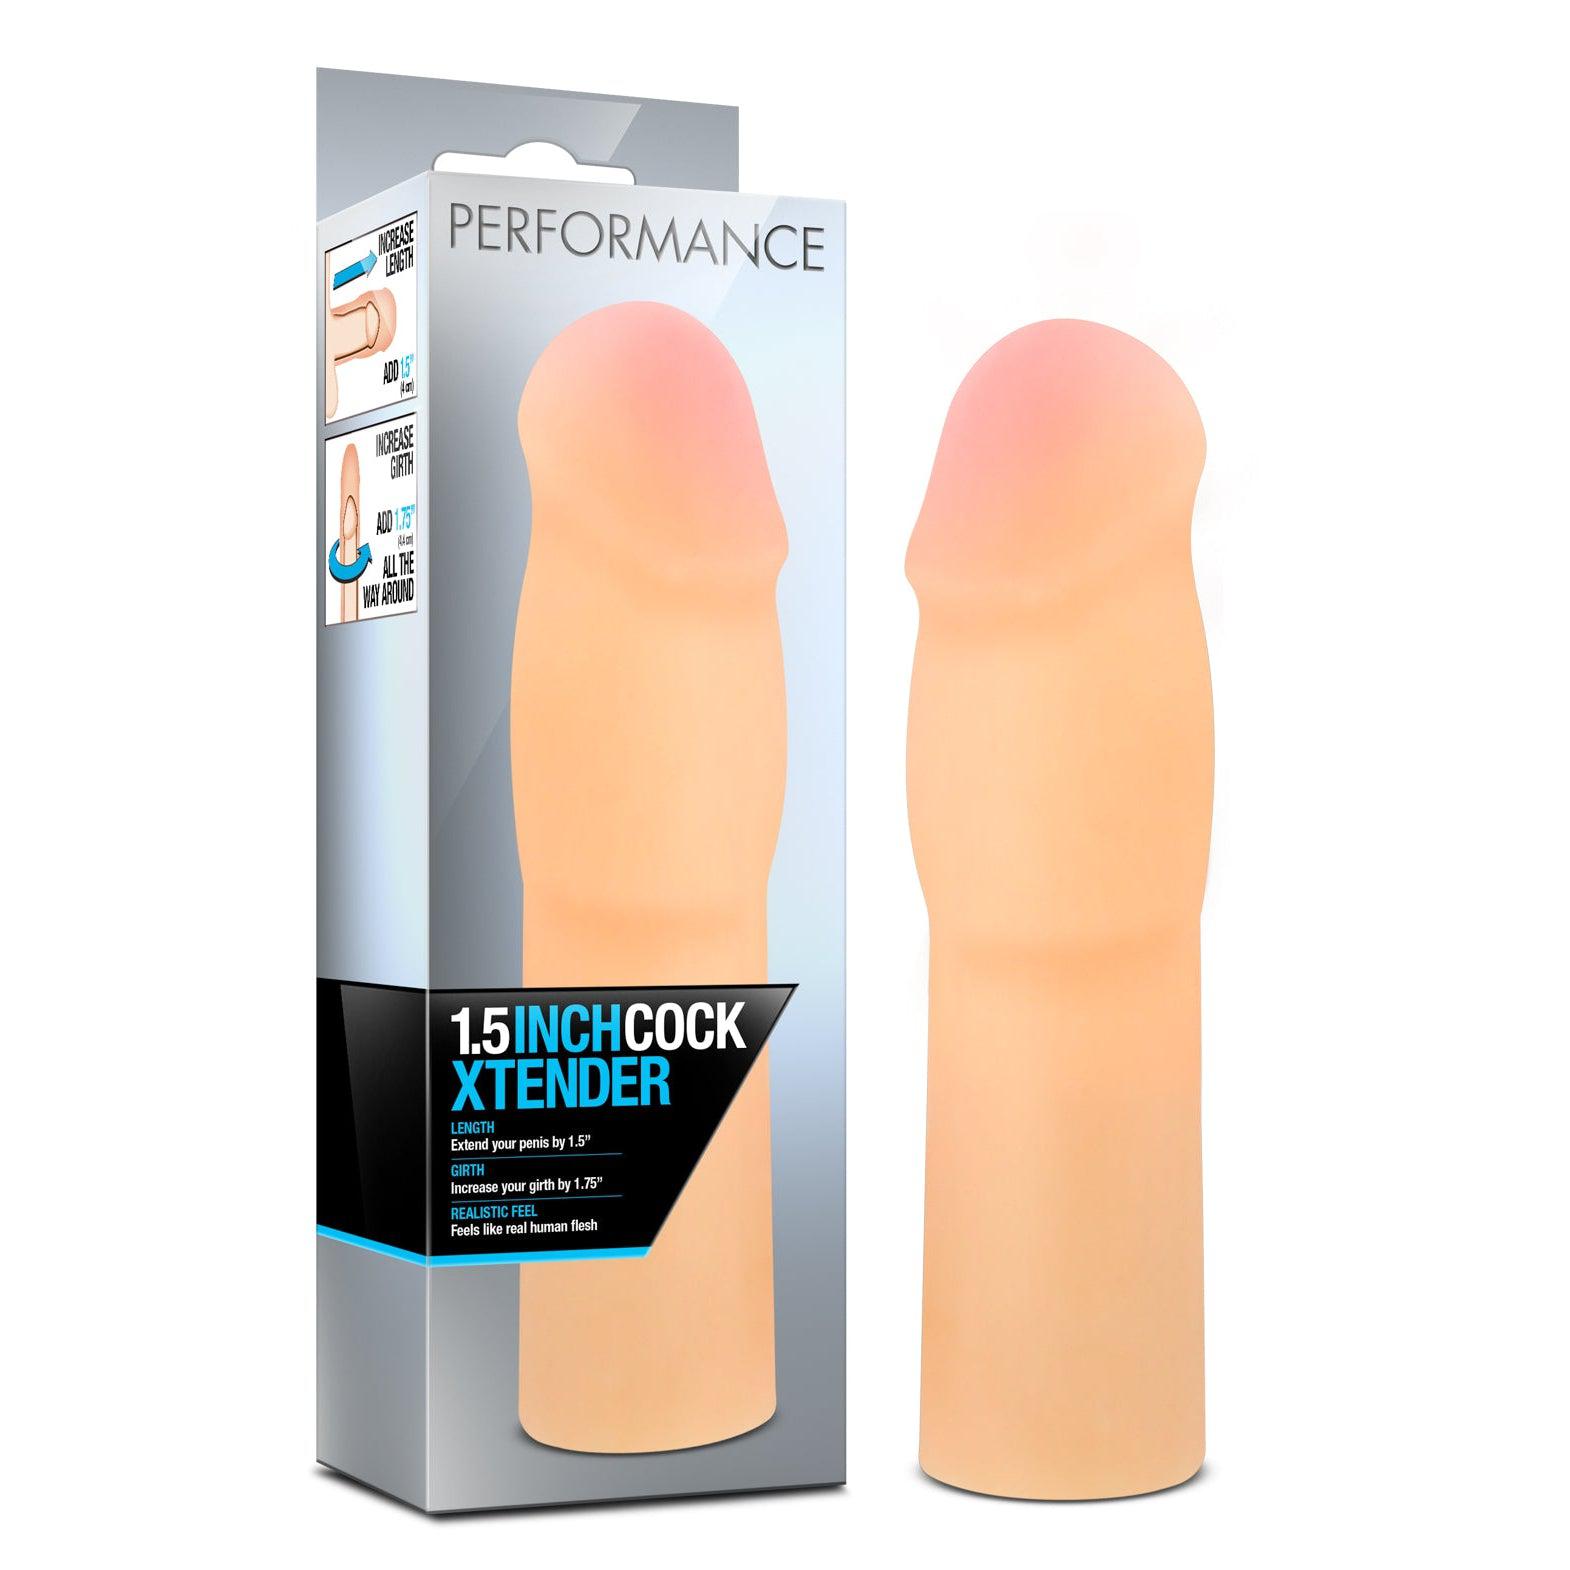 Performance 1.5 Inch Cock Xtender - Beige